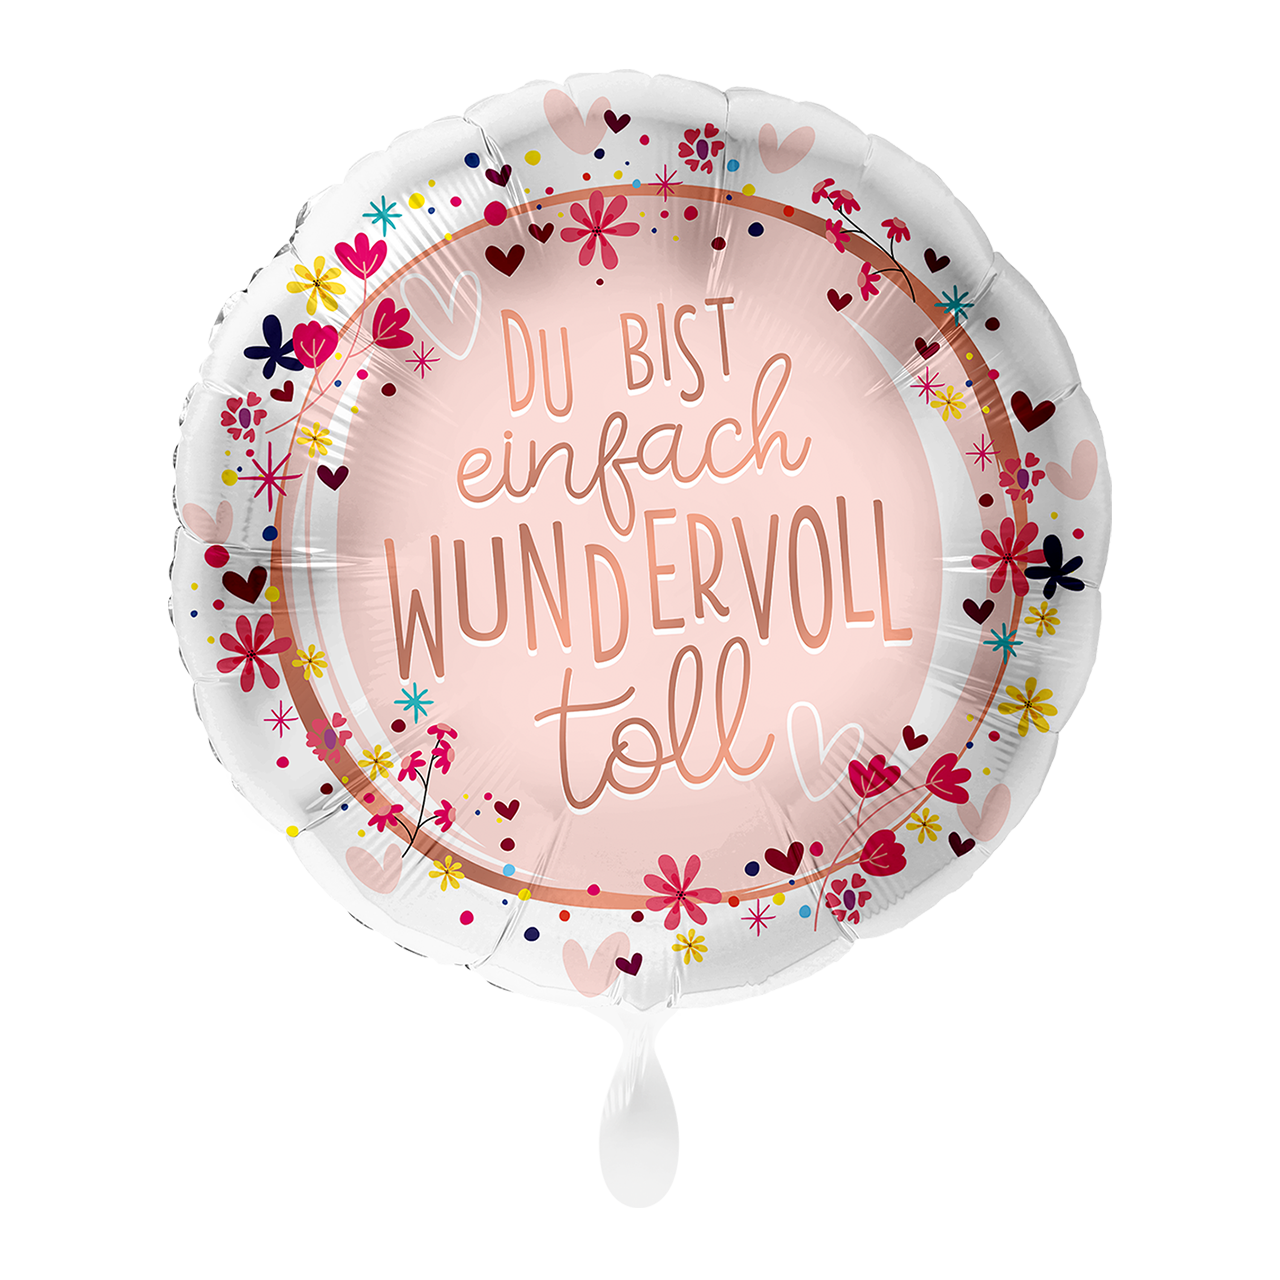 DU BIST einfach WUNDERVOLL toll - Folienballon